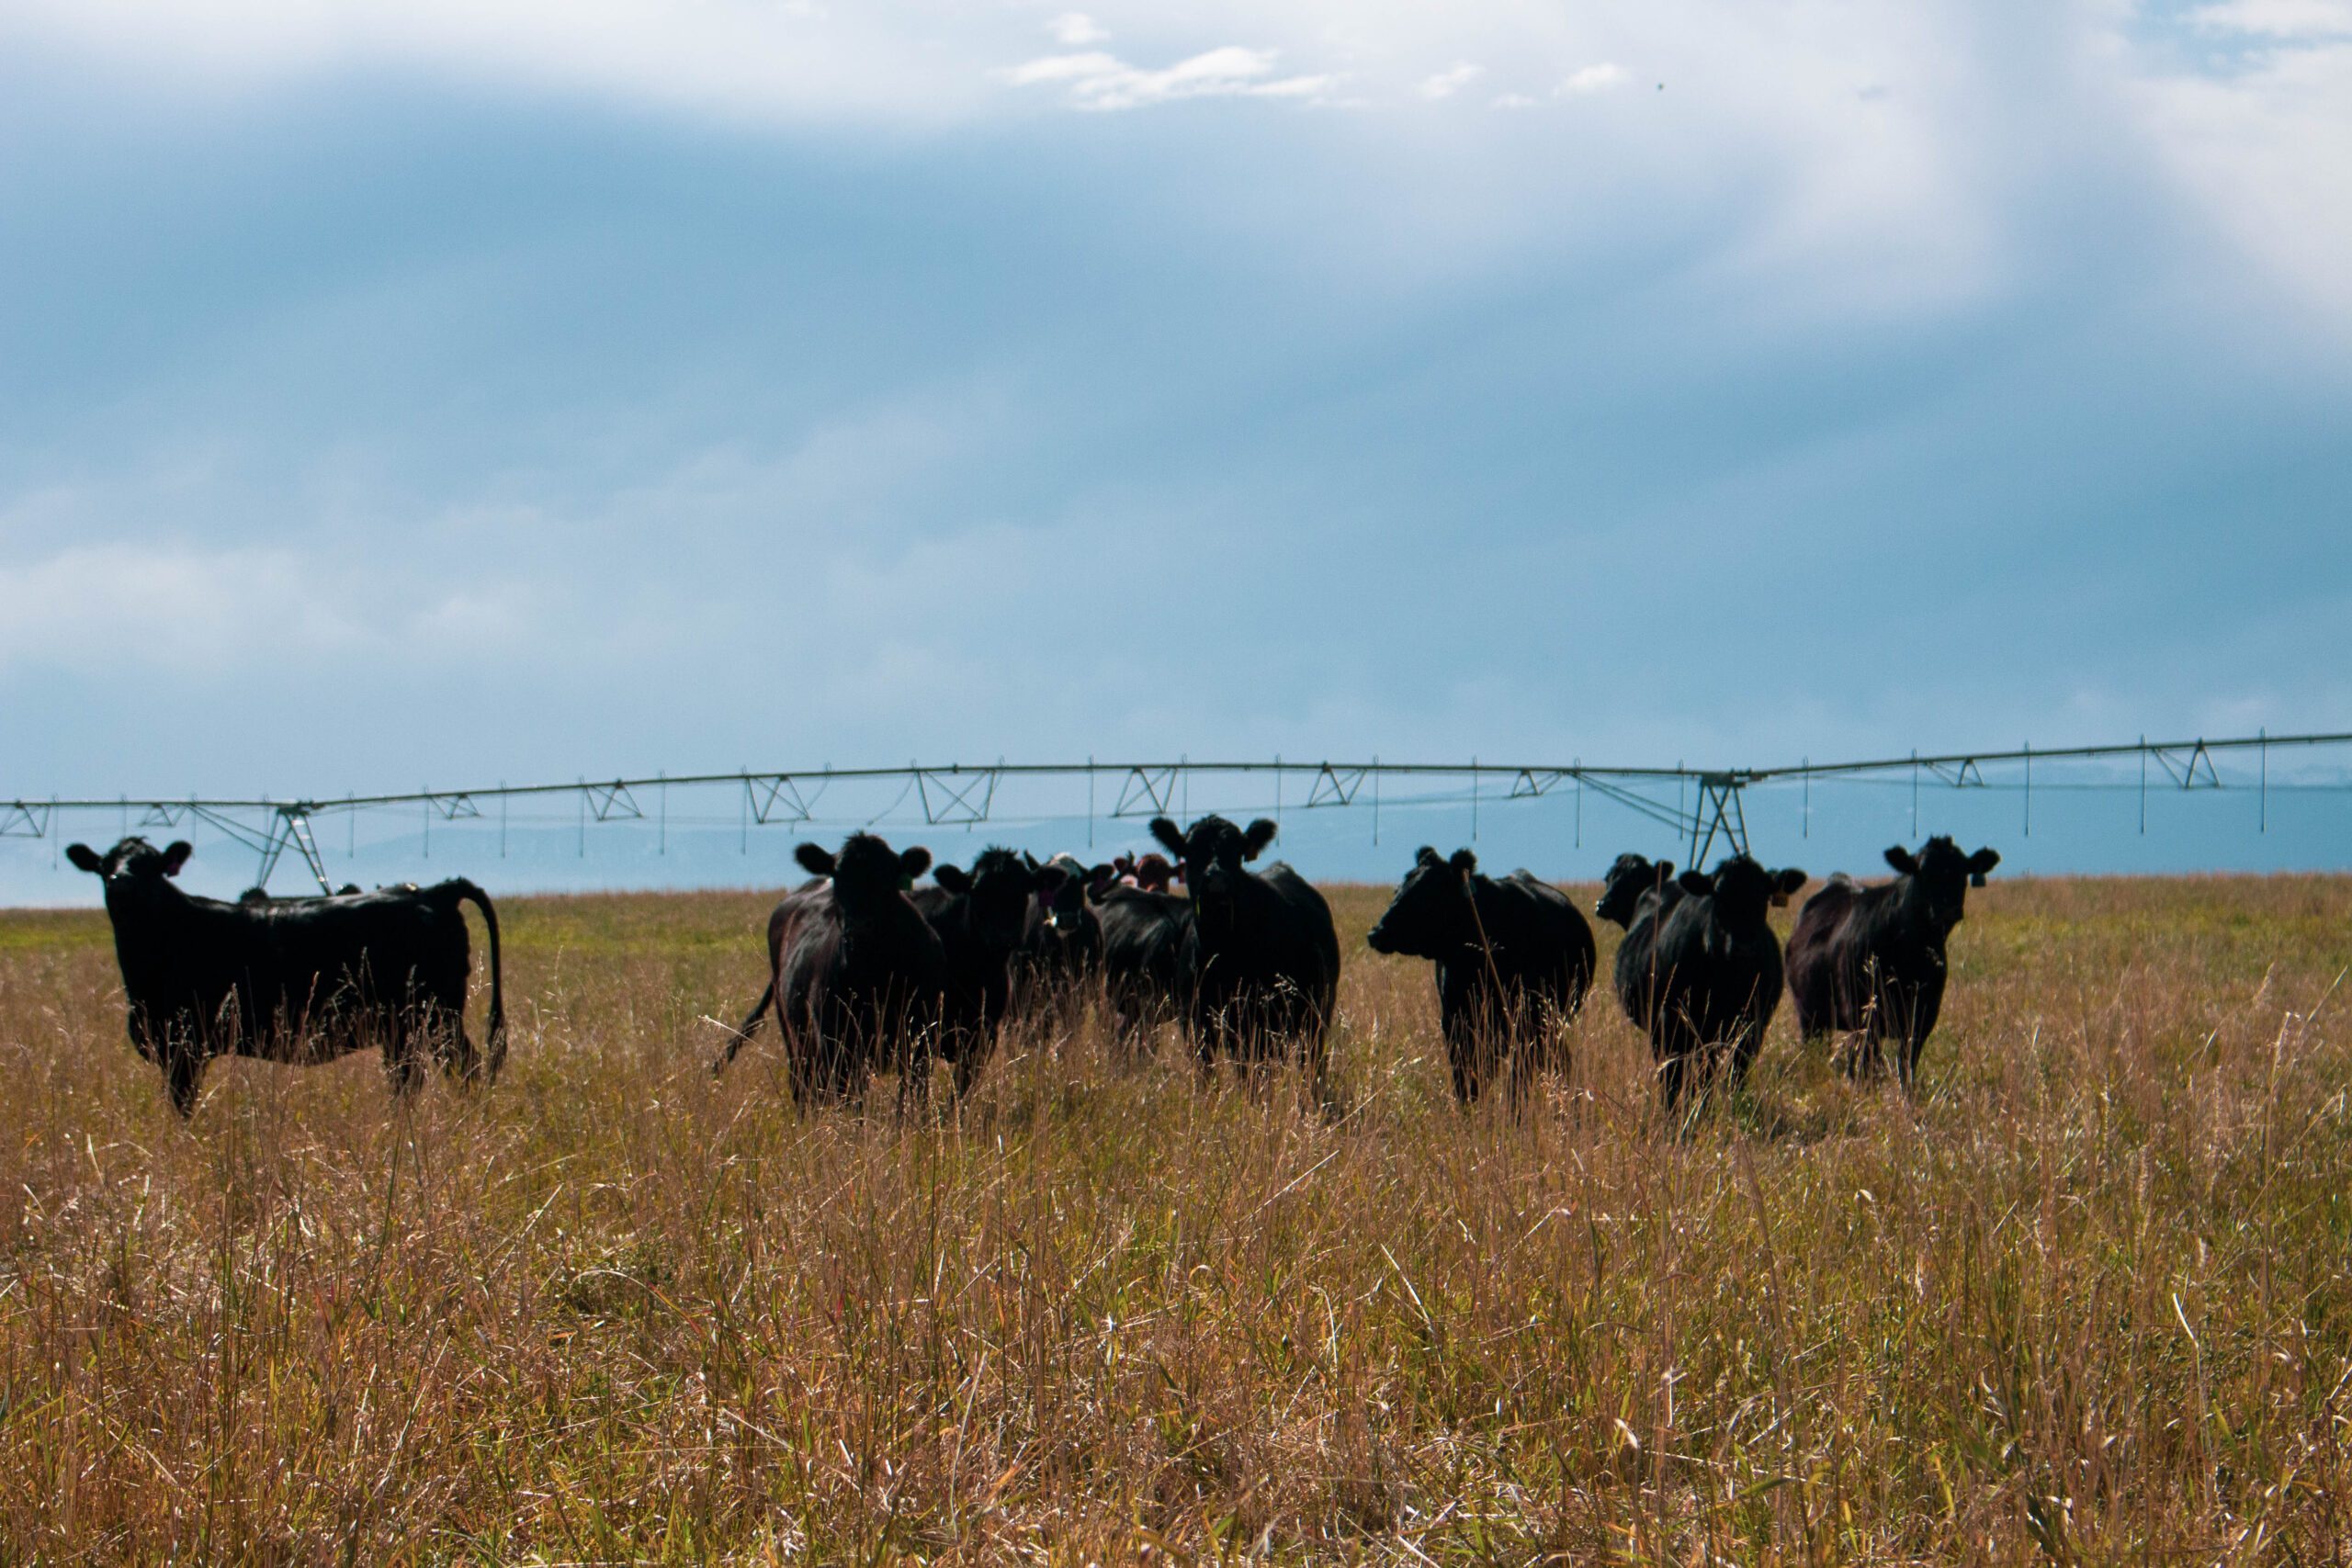 Padlock heifers on grass